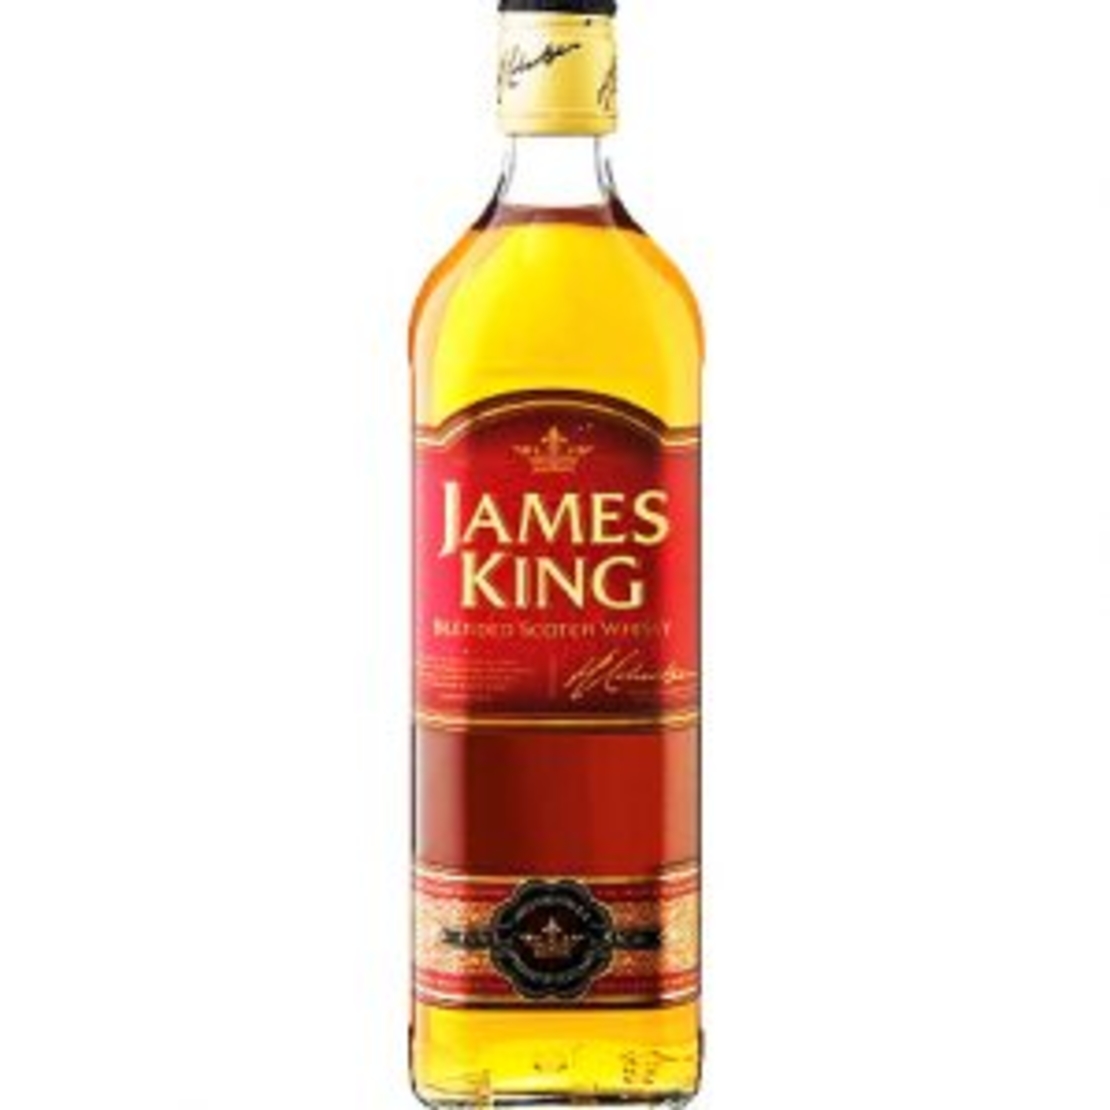 James King - Blended Scotch Whisky 700ml